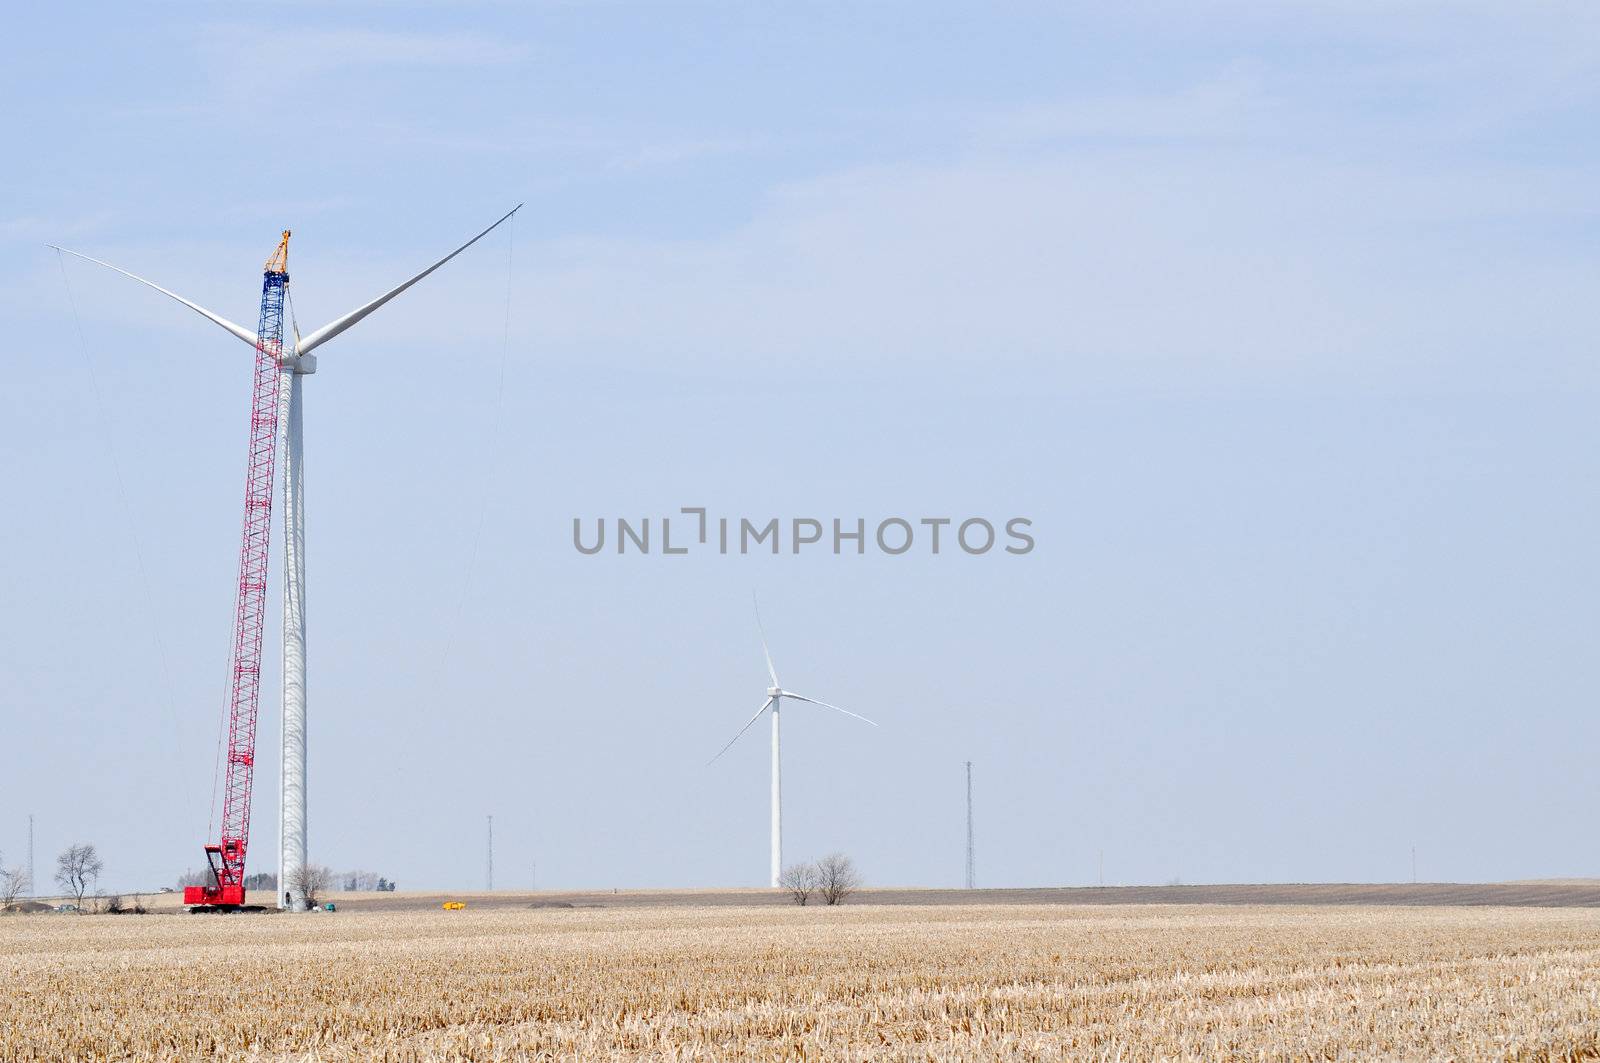 Crane assembling a turbine by RefocusPhoto